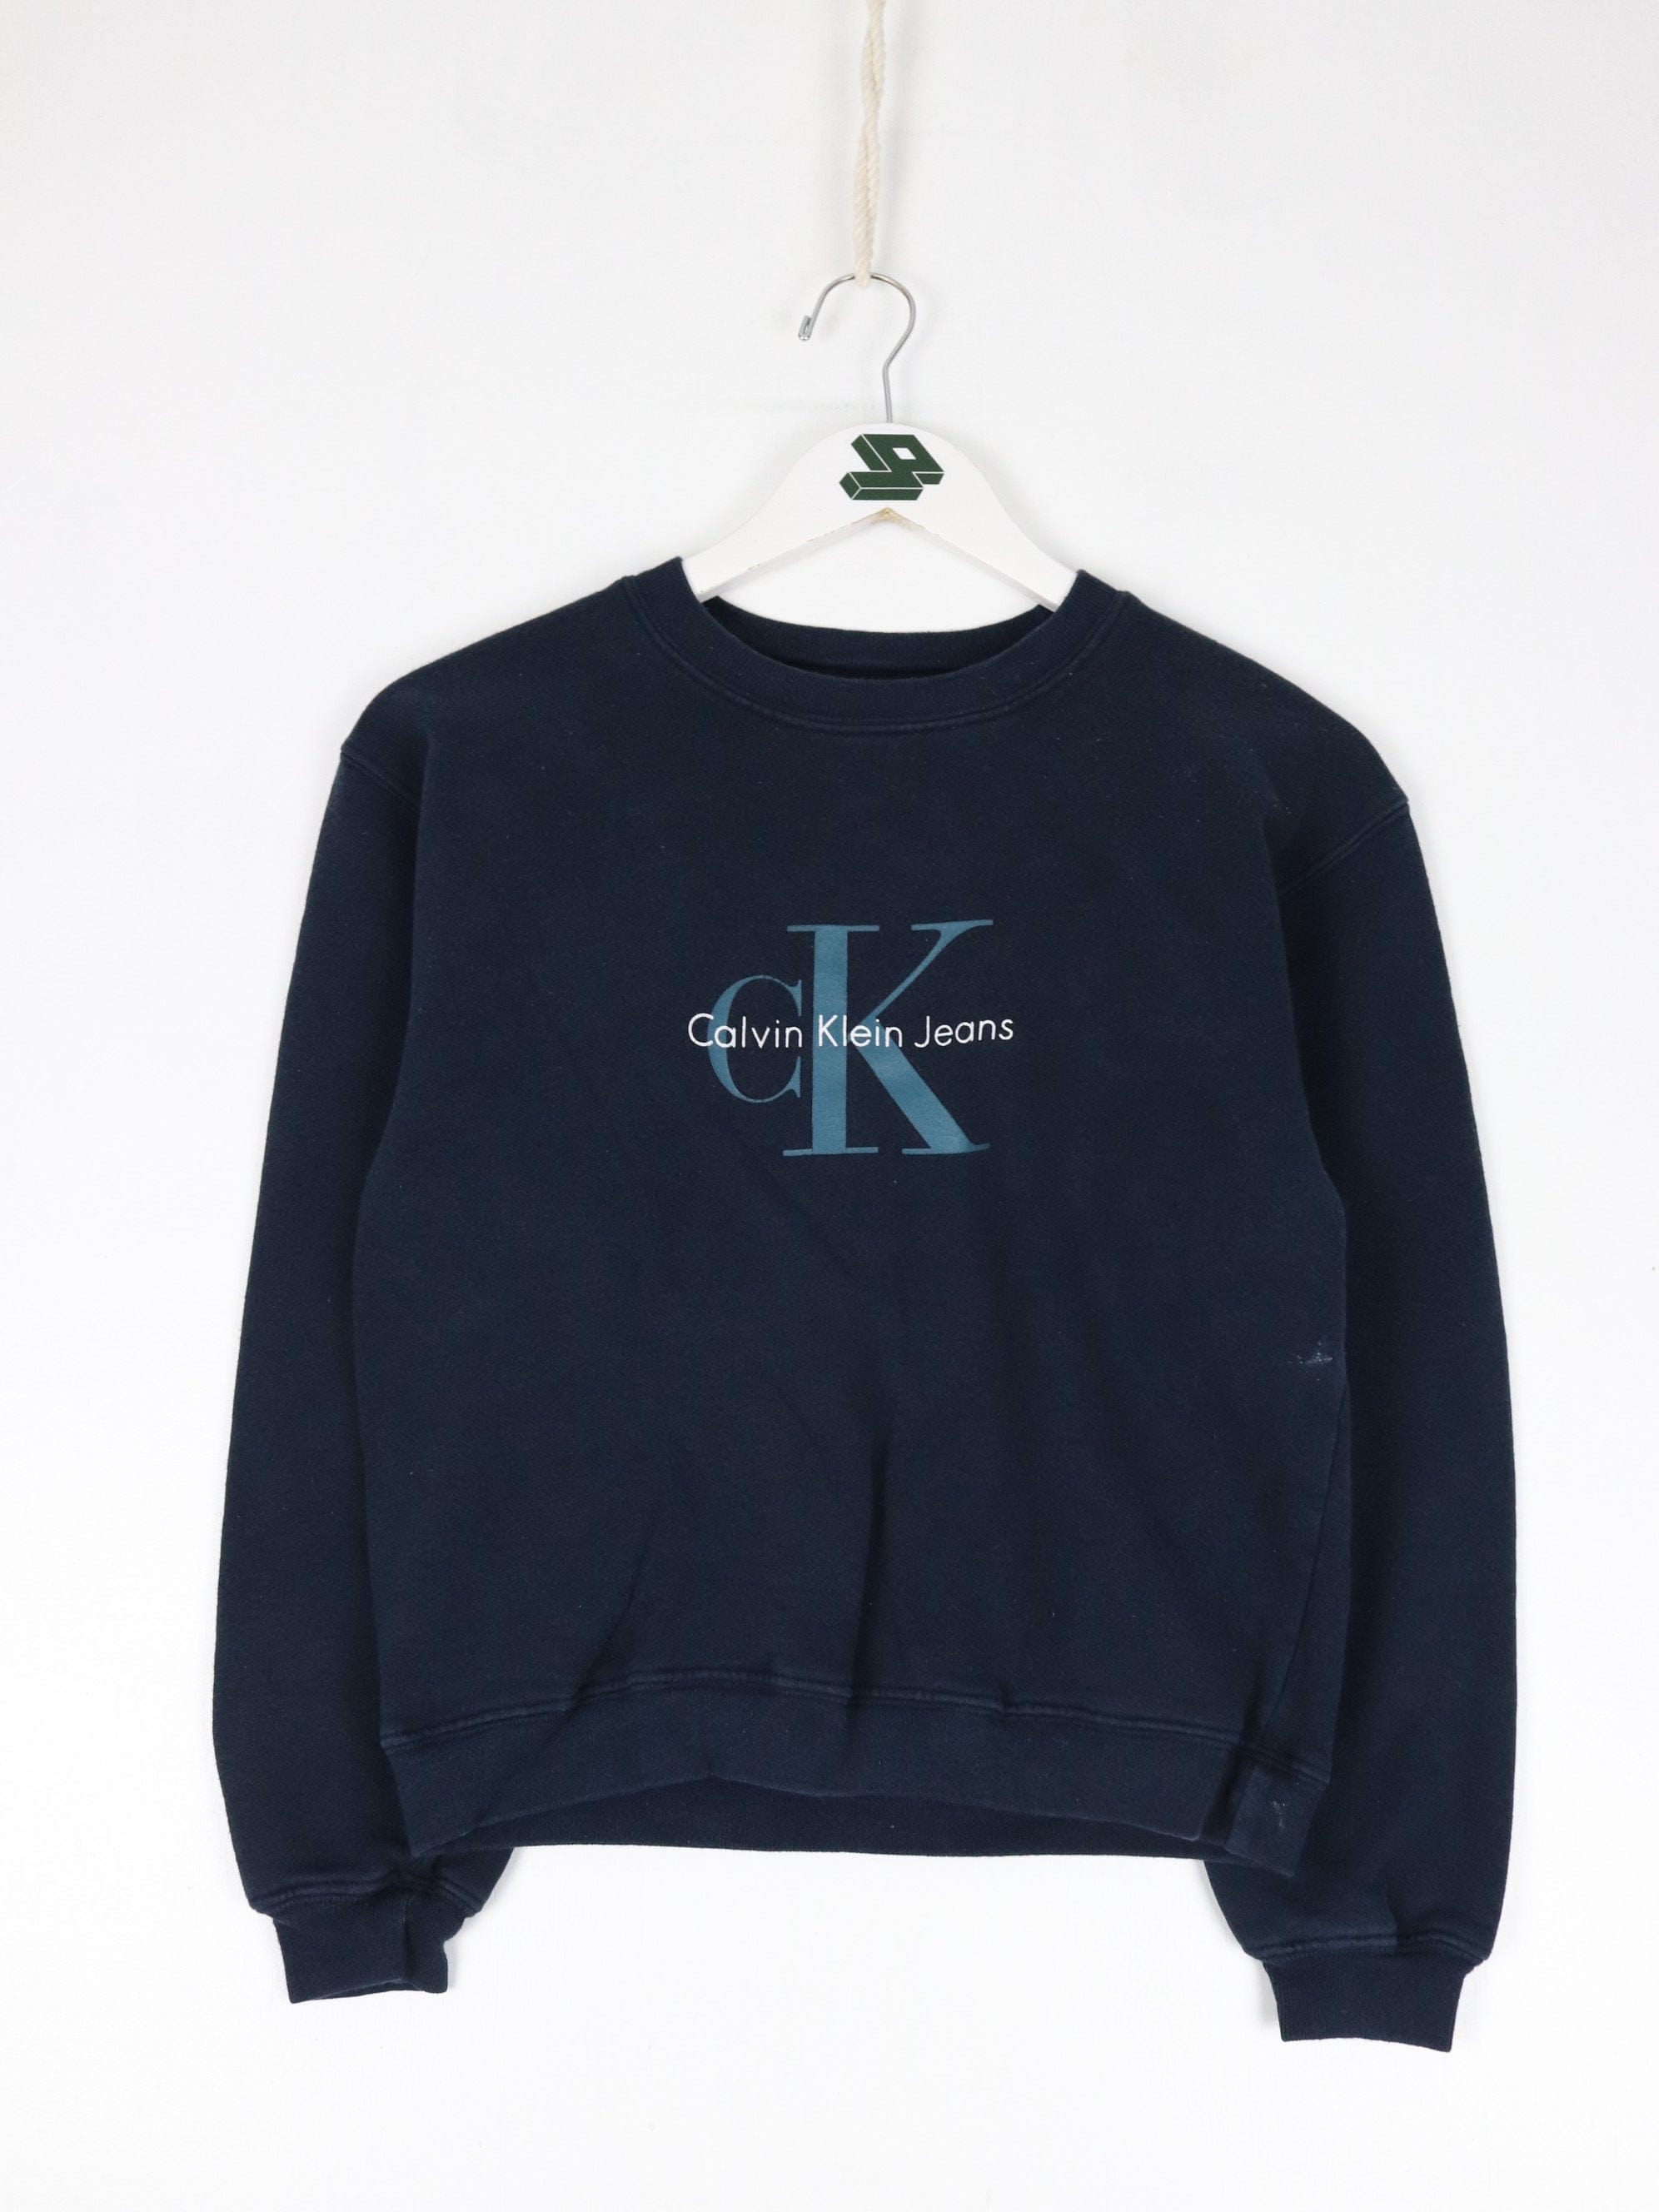 Vintage Calvin Klein Sweatshirt Youth Large Blue 90s Sweater